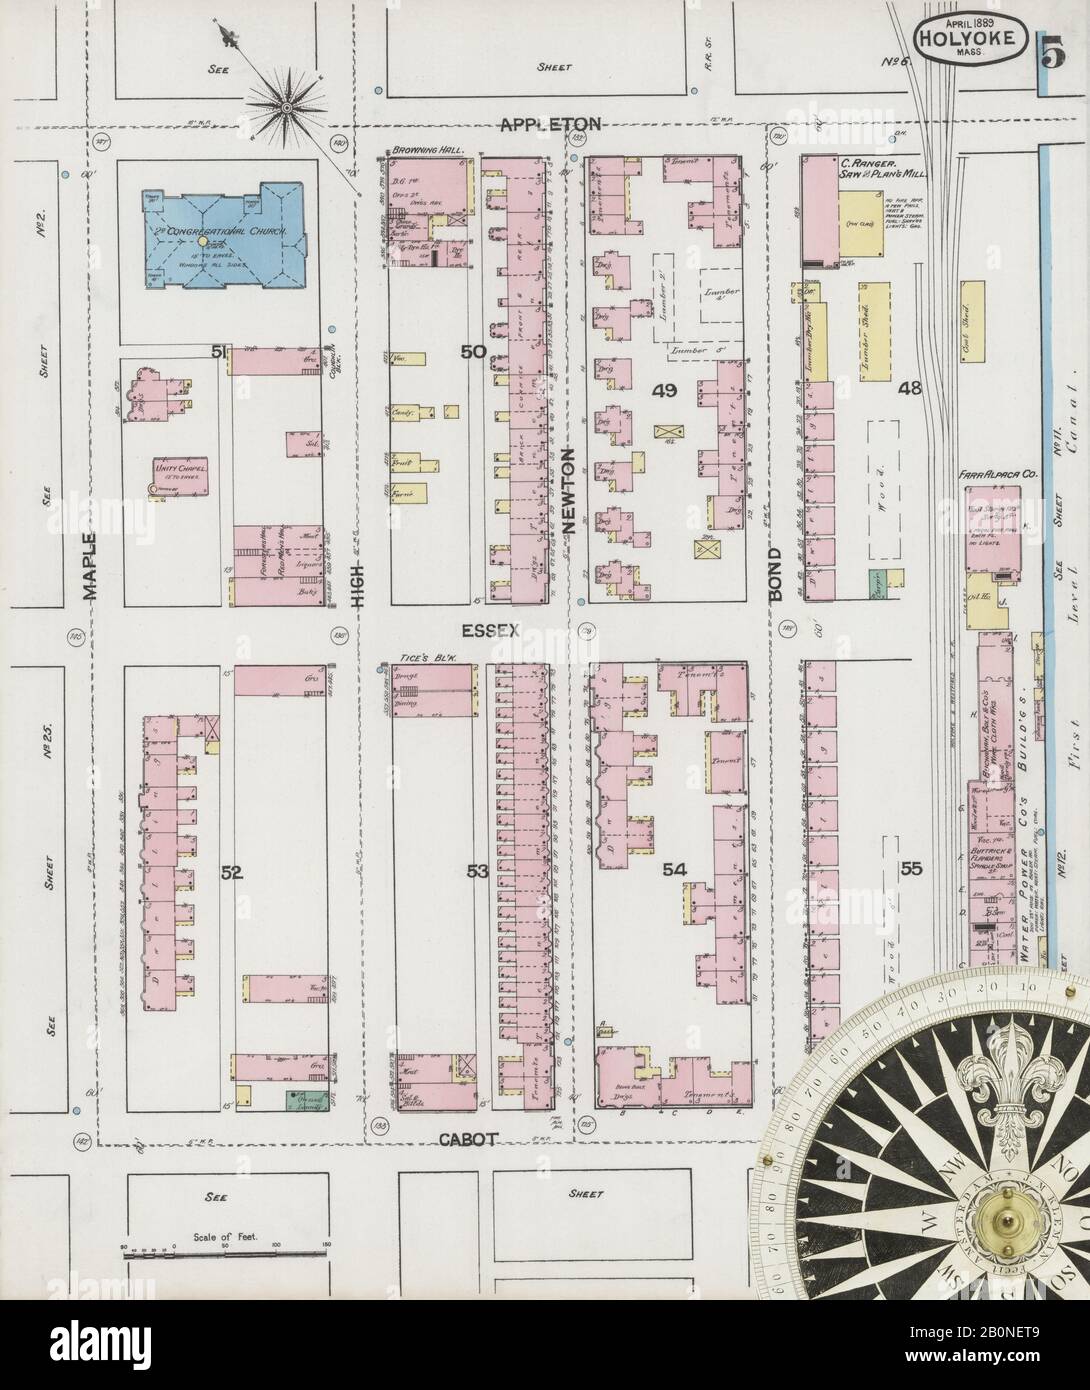 Bild 5 von Sanborn Fire Insurance Map aus Holyoke, Hampden County, Massachusetts. Apr. 30 Blatt(e), Amerika, Straßenkarte mit einem Kompass Aus Dem 19. Jahrhundert Stockfoto